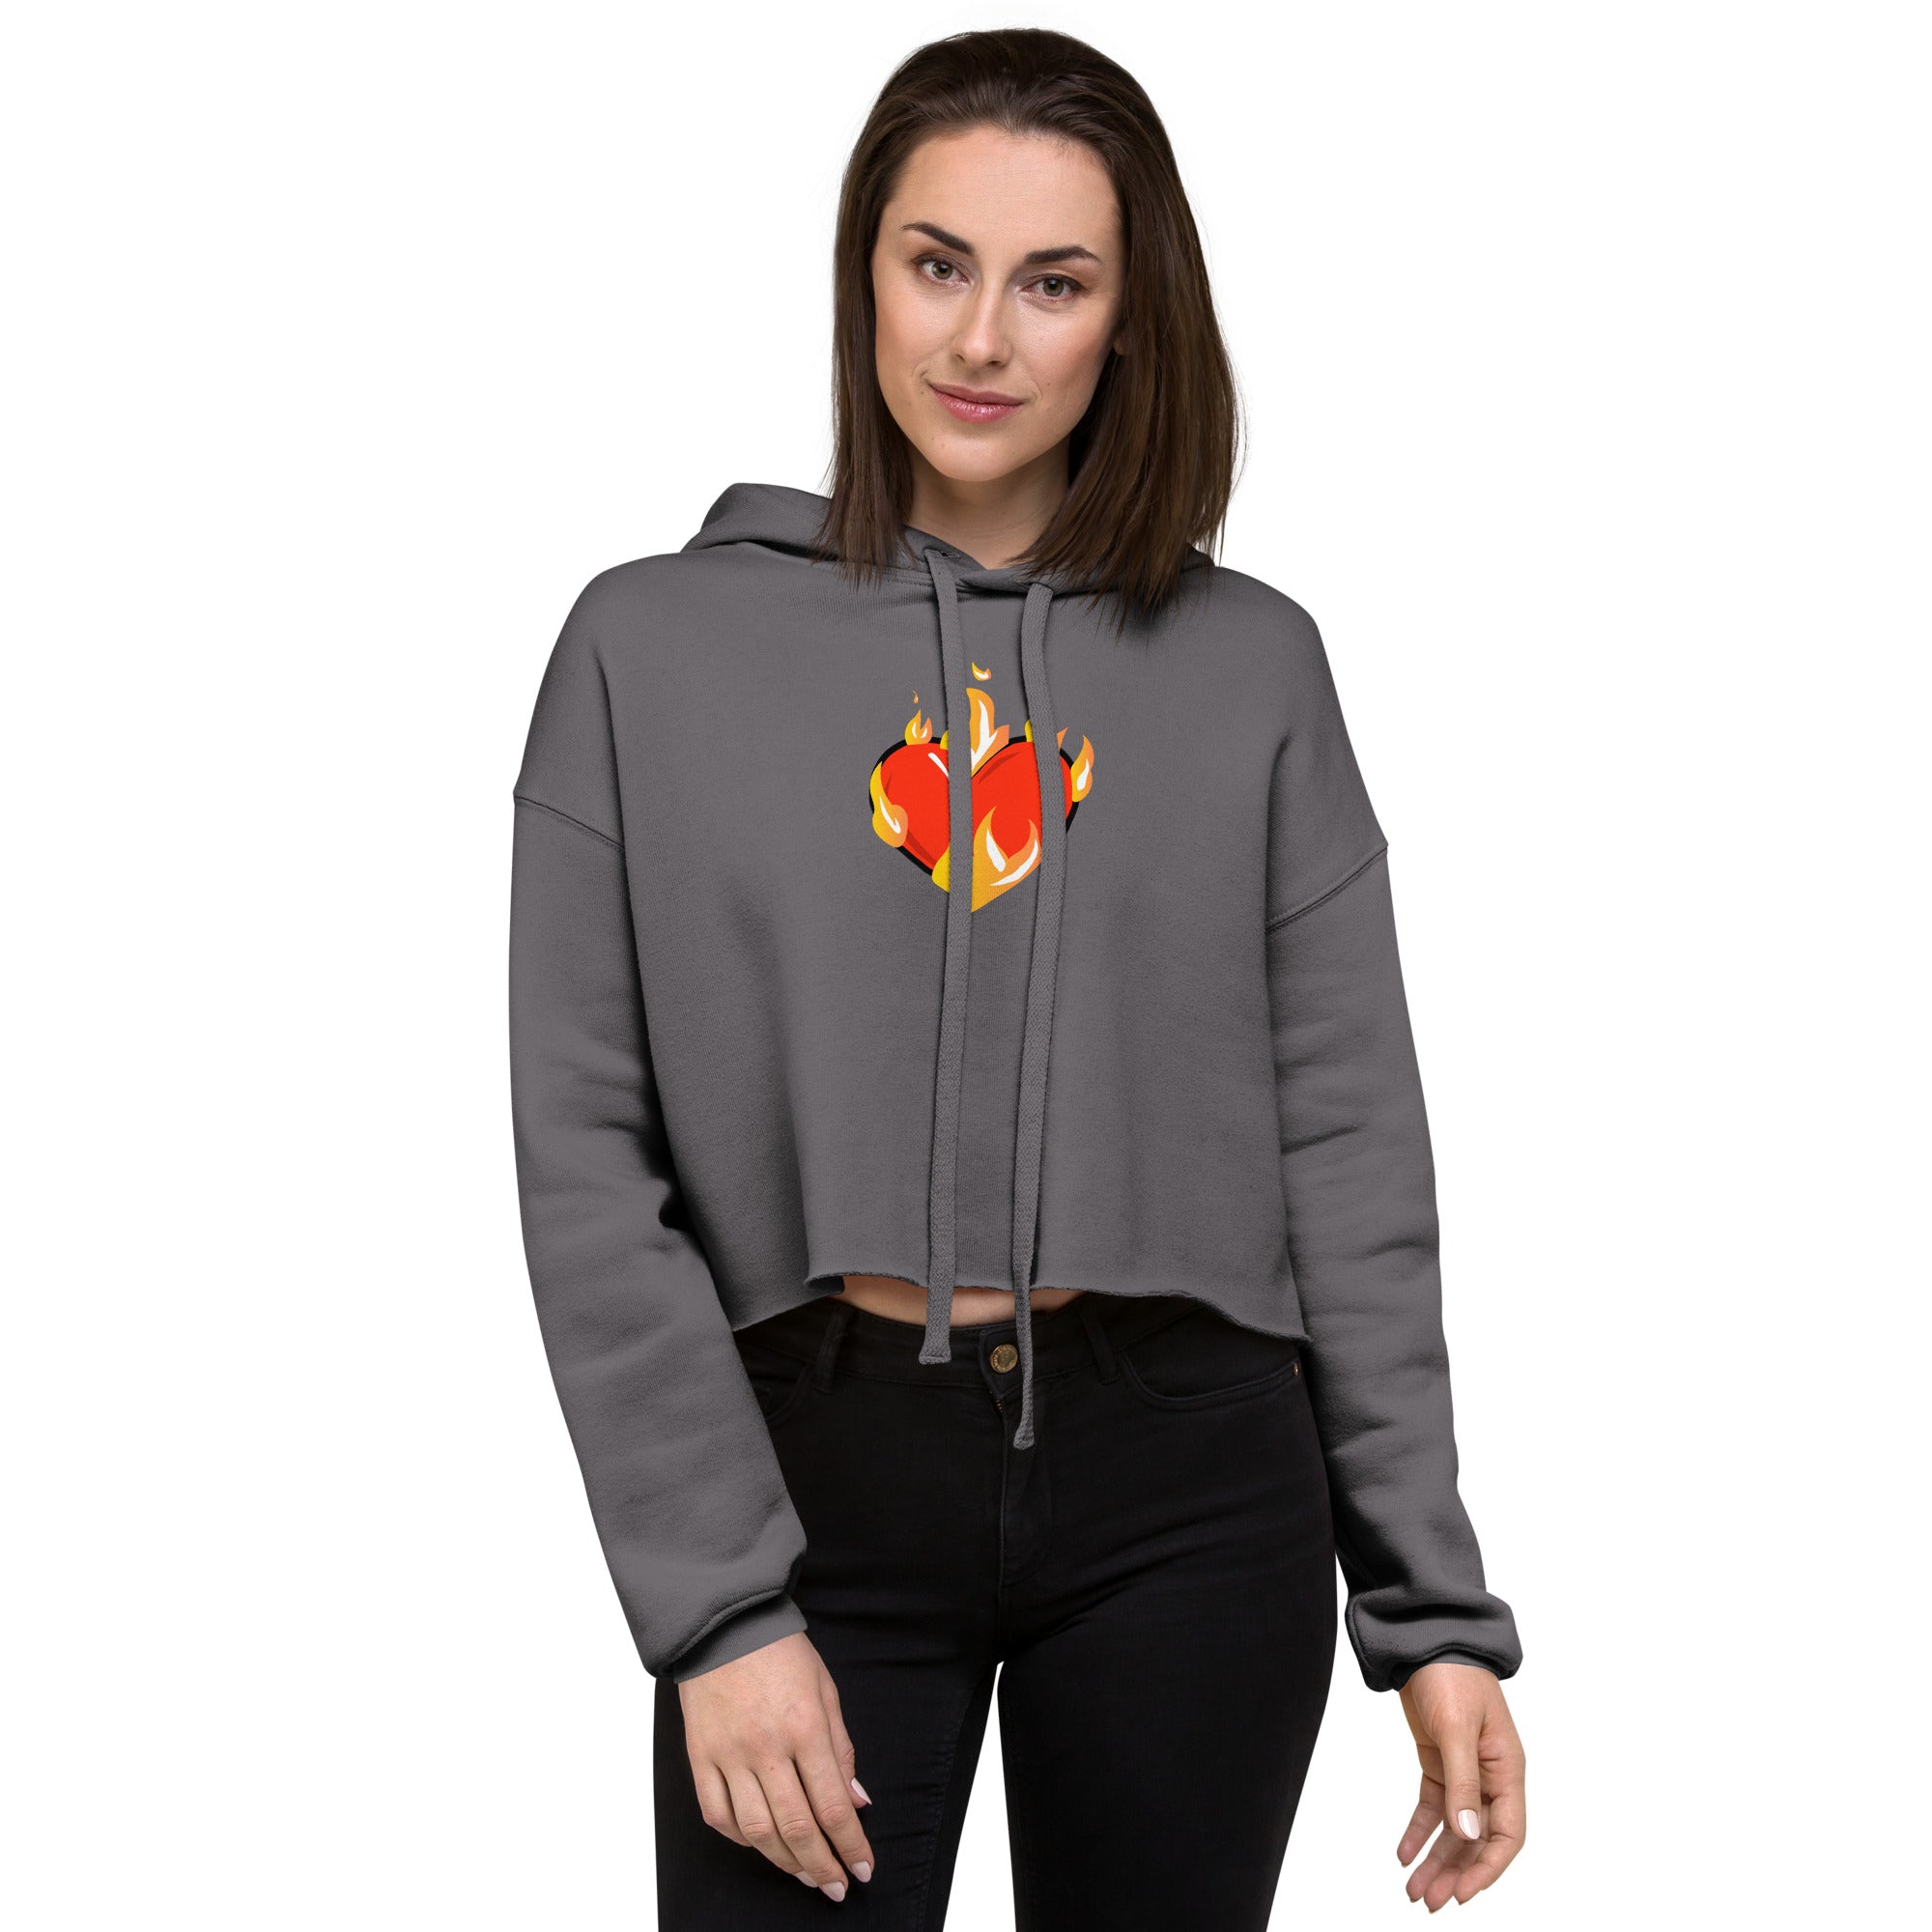 Women's Novelty Crop Hoodie Graphic - Heart on Fire